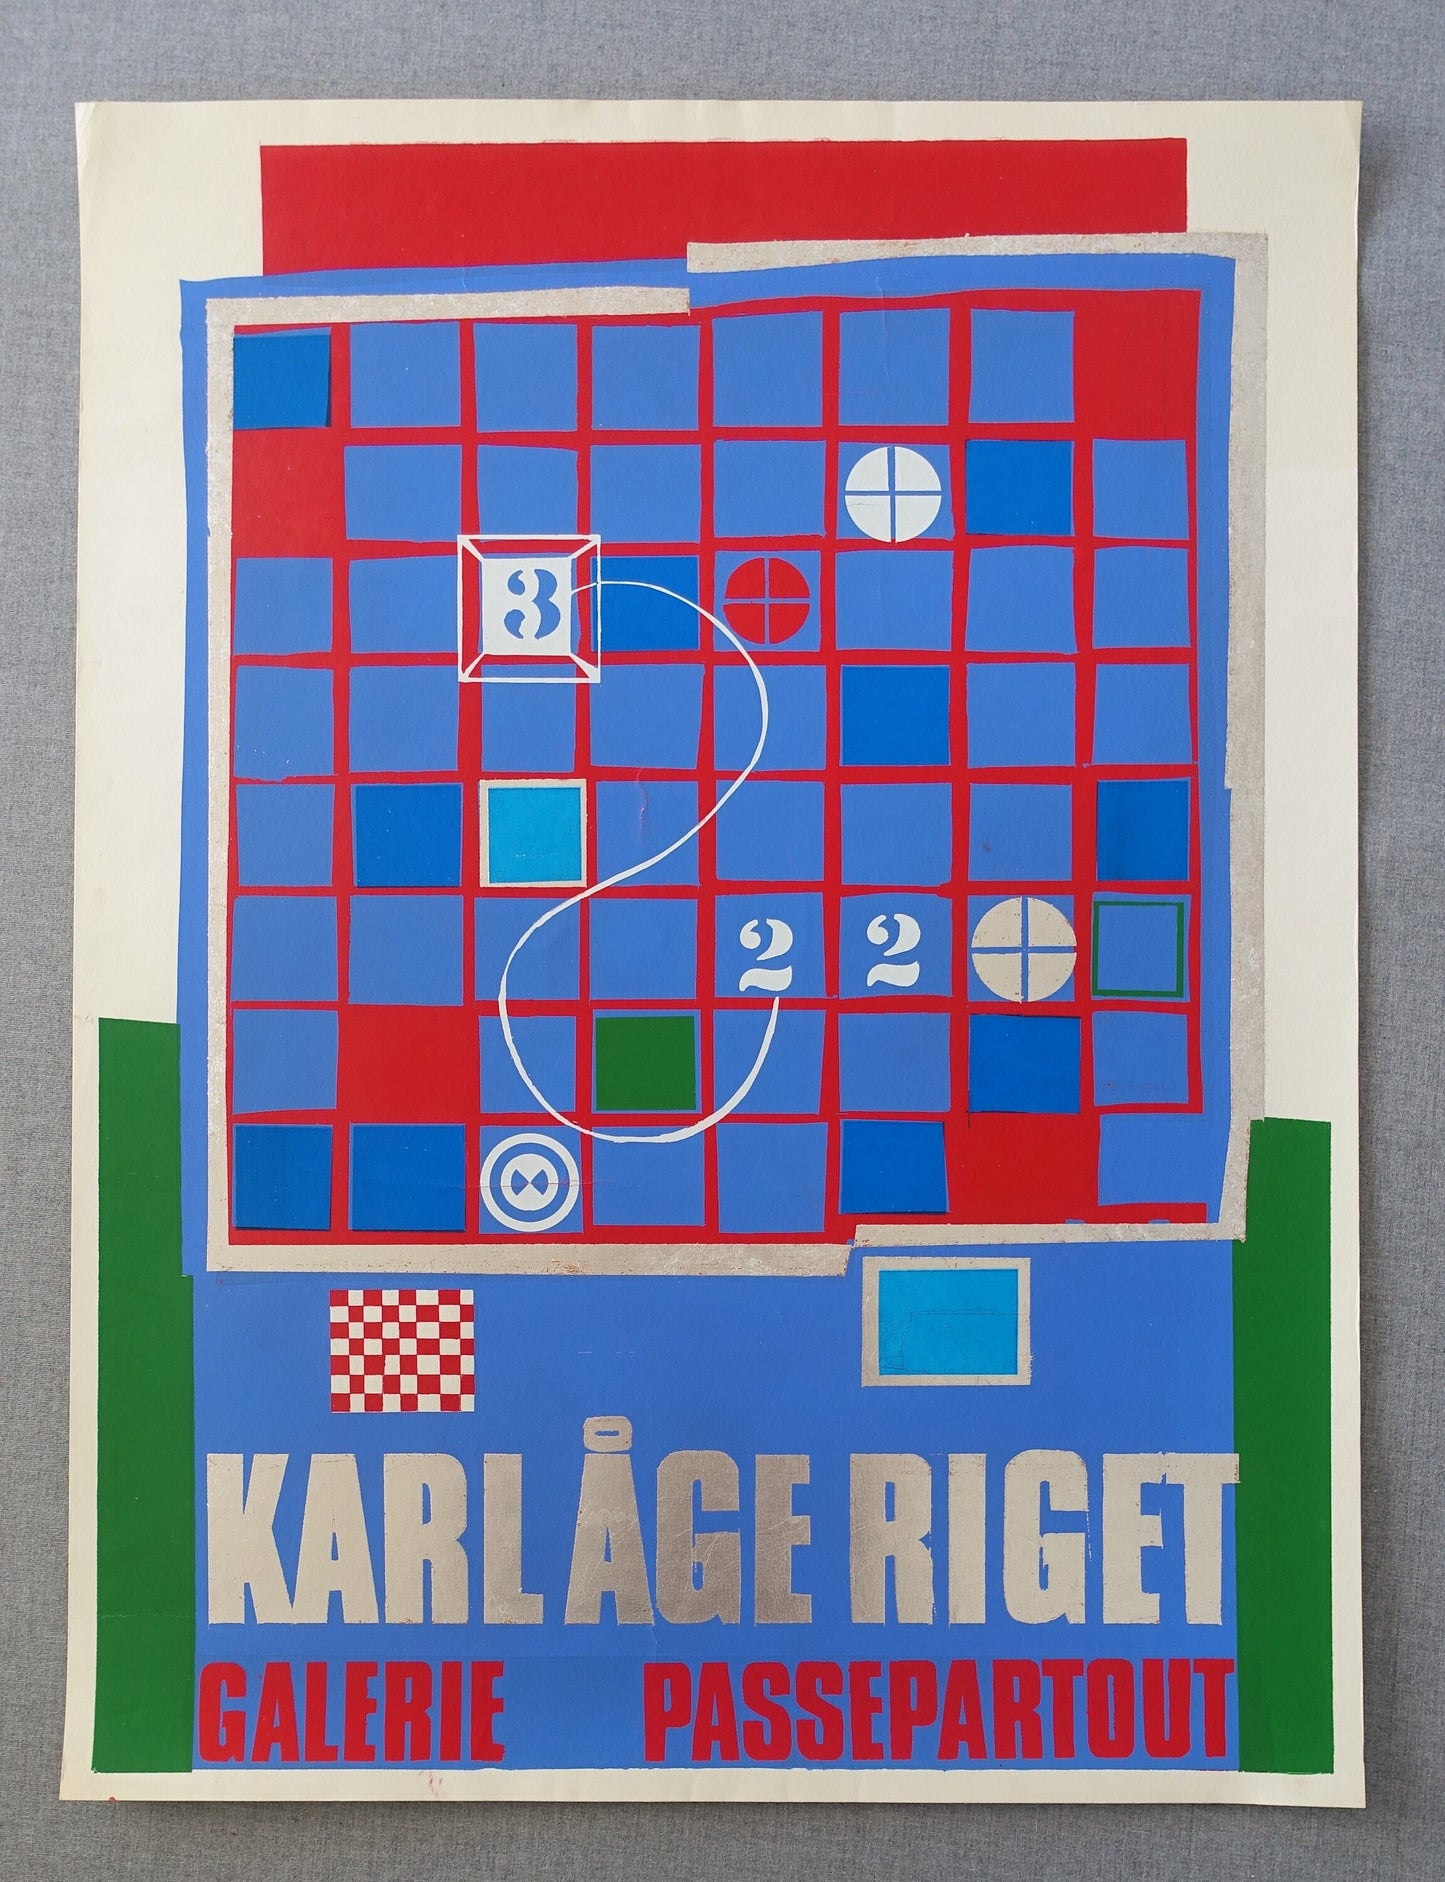 1970 Karl Åge Riget Galerie Passepartout- Original Vintage Poster